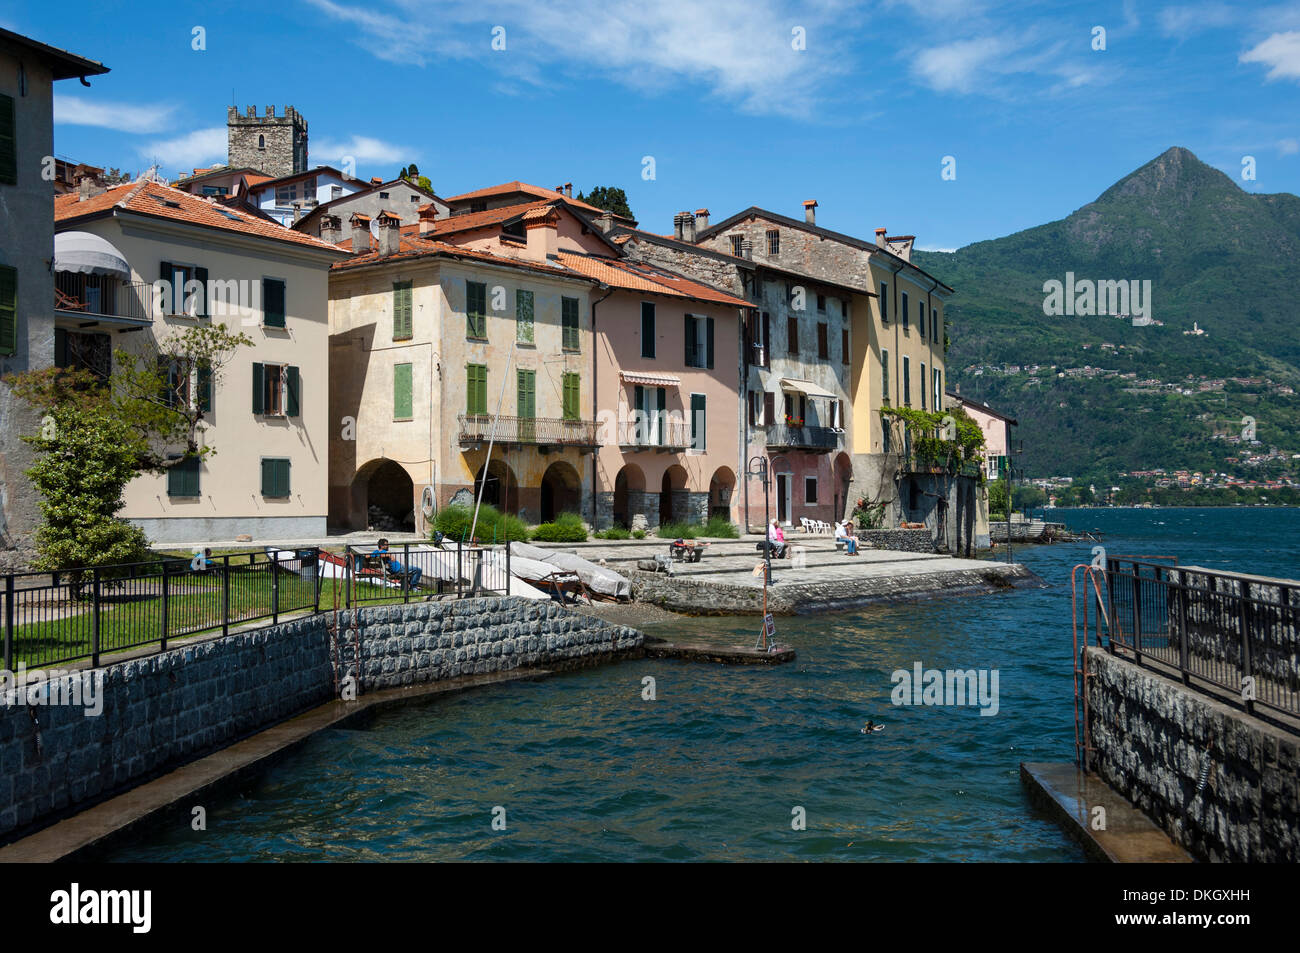 Seeseite, am Hafen, Rezzonico, Comer See, italienische Seen, Lombardei, Italien, Europa Stockfoto